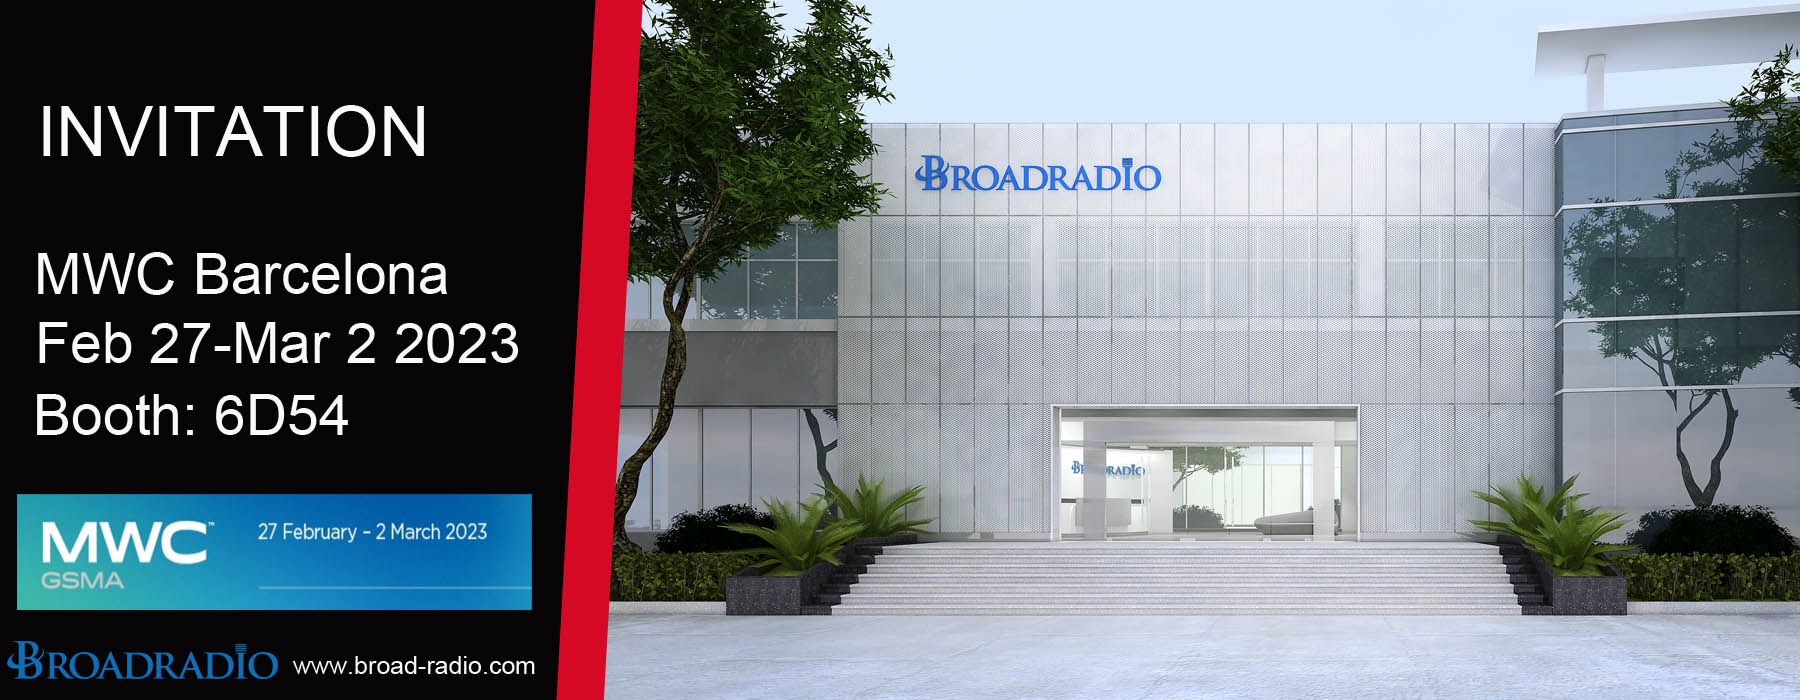 Broadradio to Participate in MWC Barcelona in Feb 2023